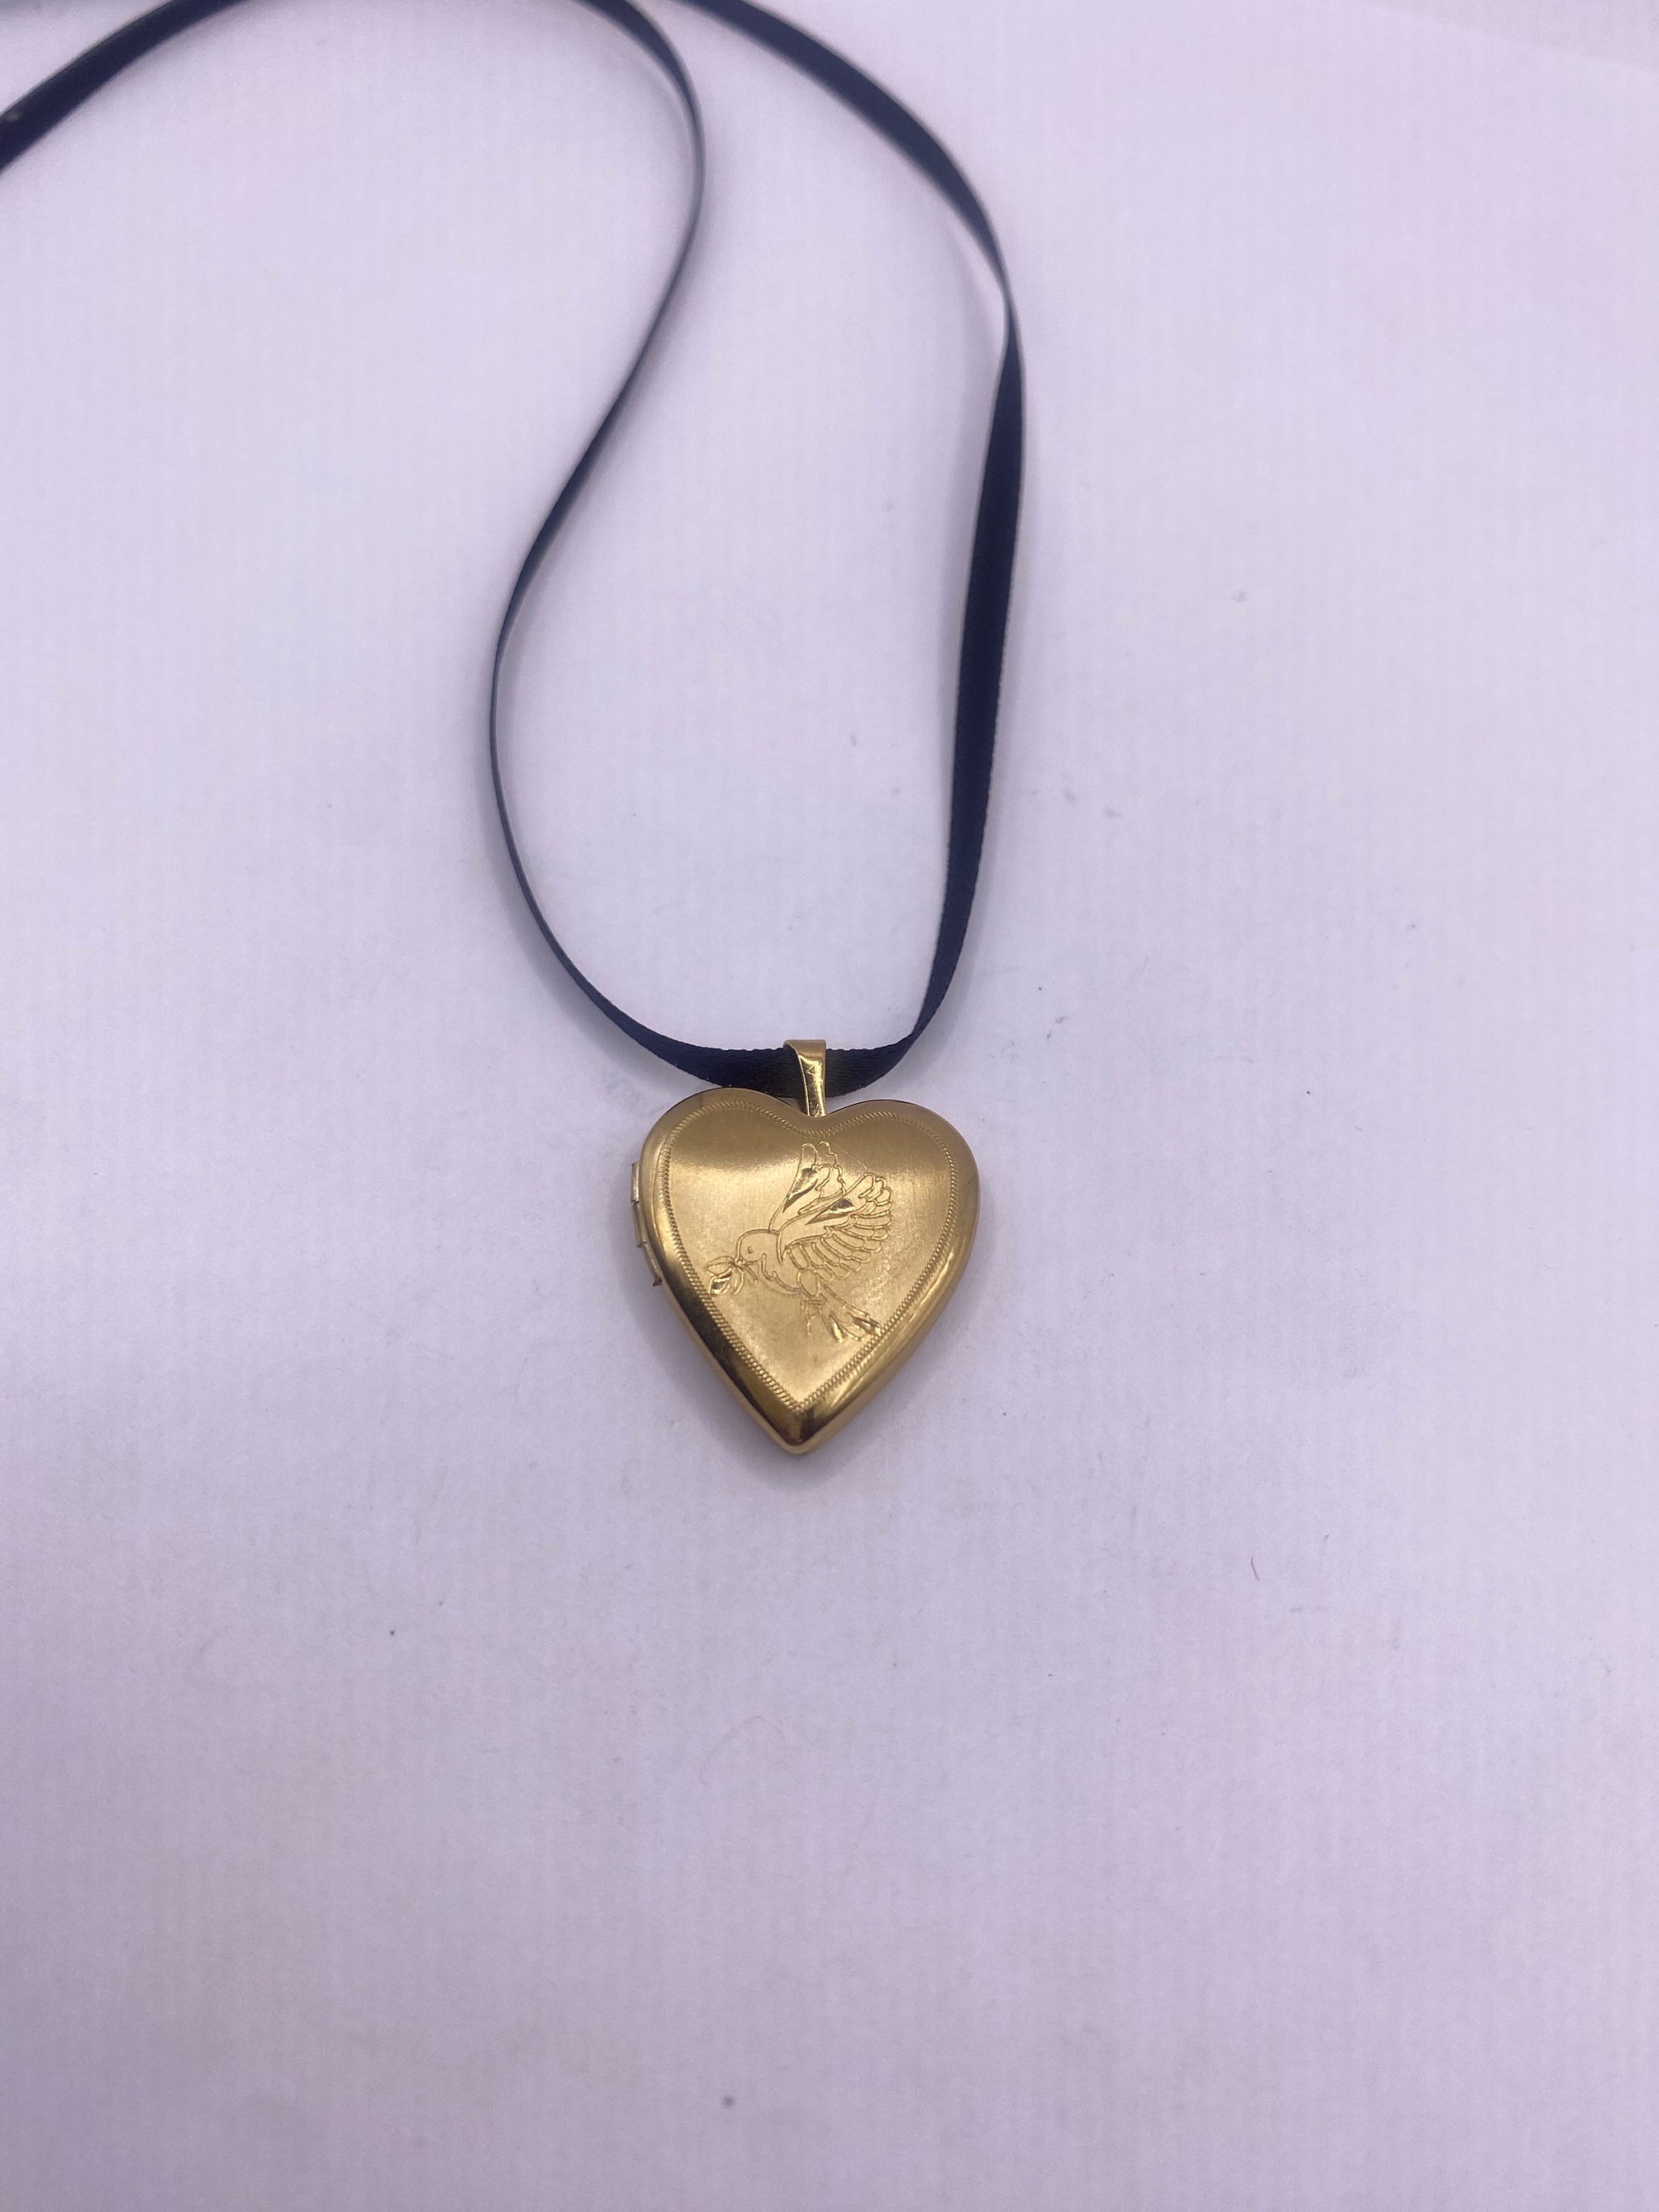 Vintage Gold Locket | Tiny Heart 9k Gold Filled Pendant Photo Memory Charm Engraved Bird | Choker Necklace